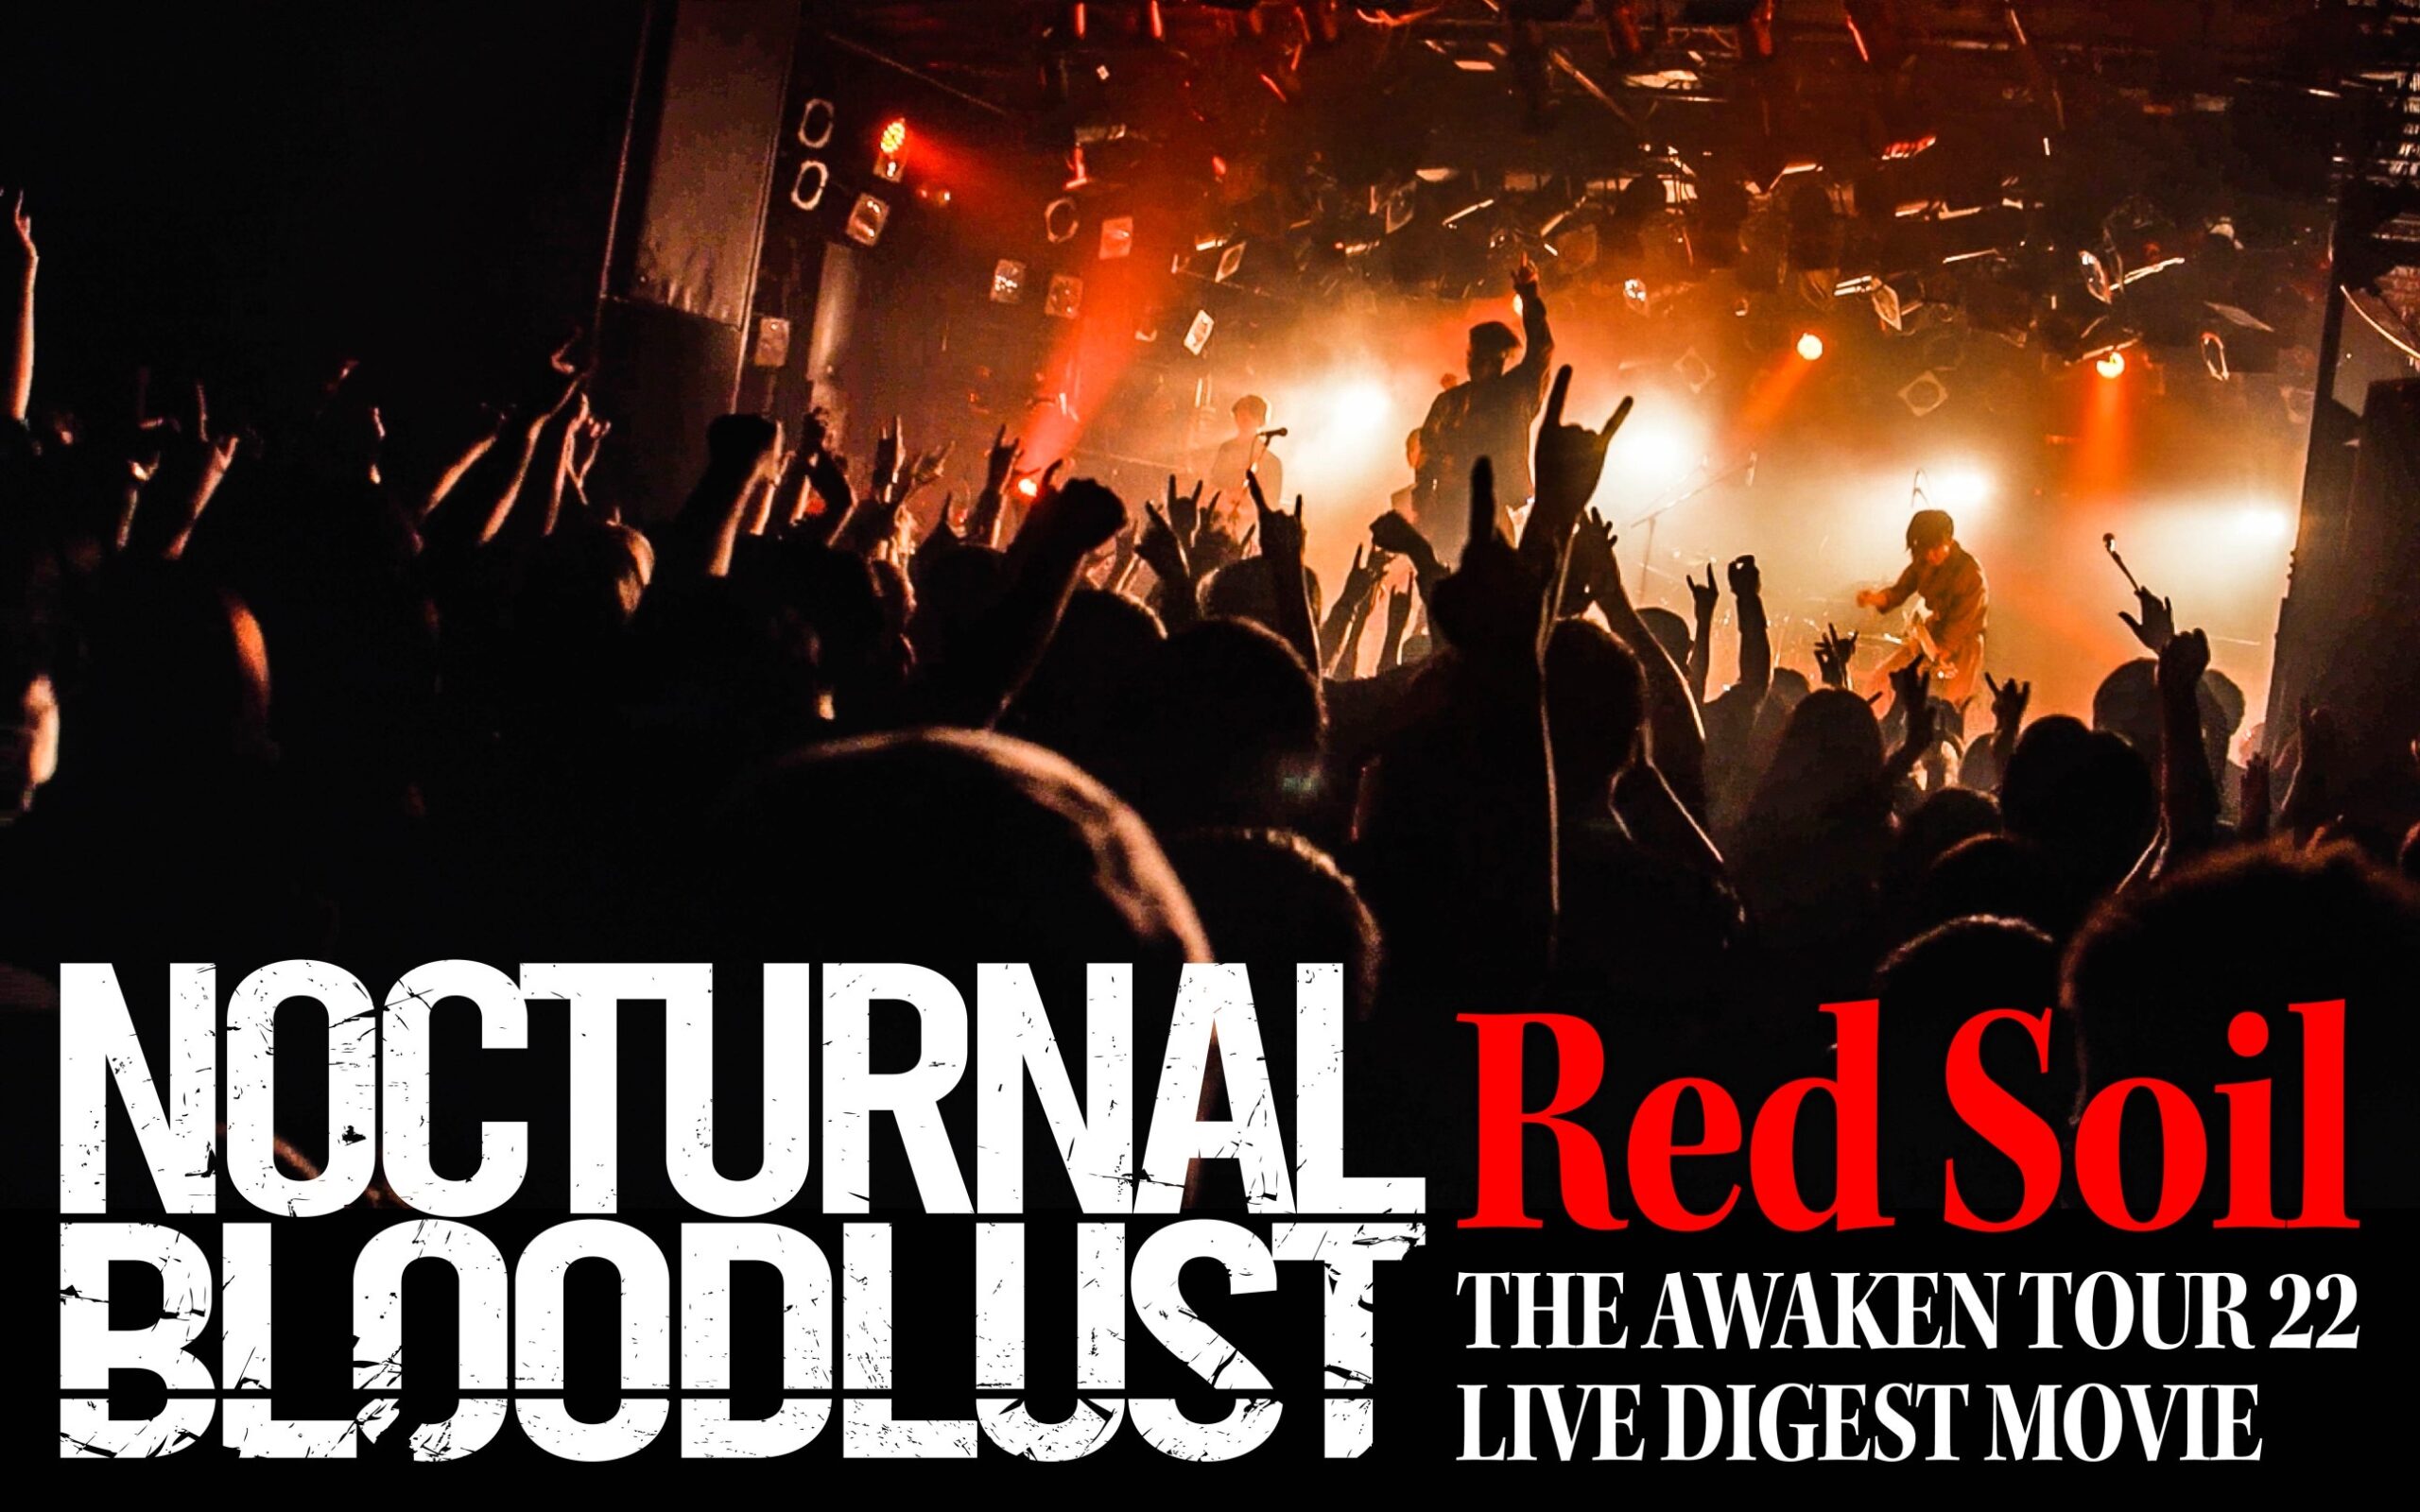 NOCTURNAL BLOODLUST – Red Soil (THE AWAKEN TOUR 22 DIGEST MOVIE)